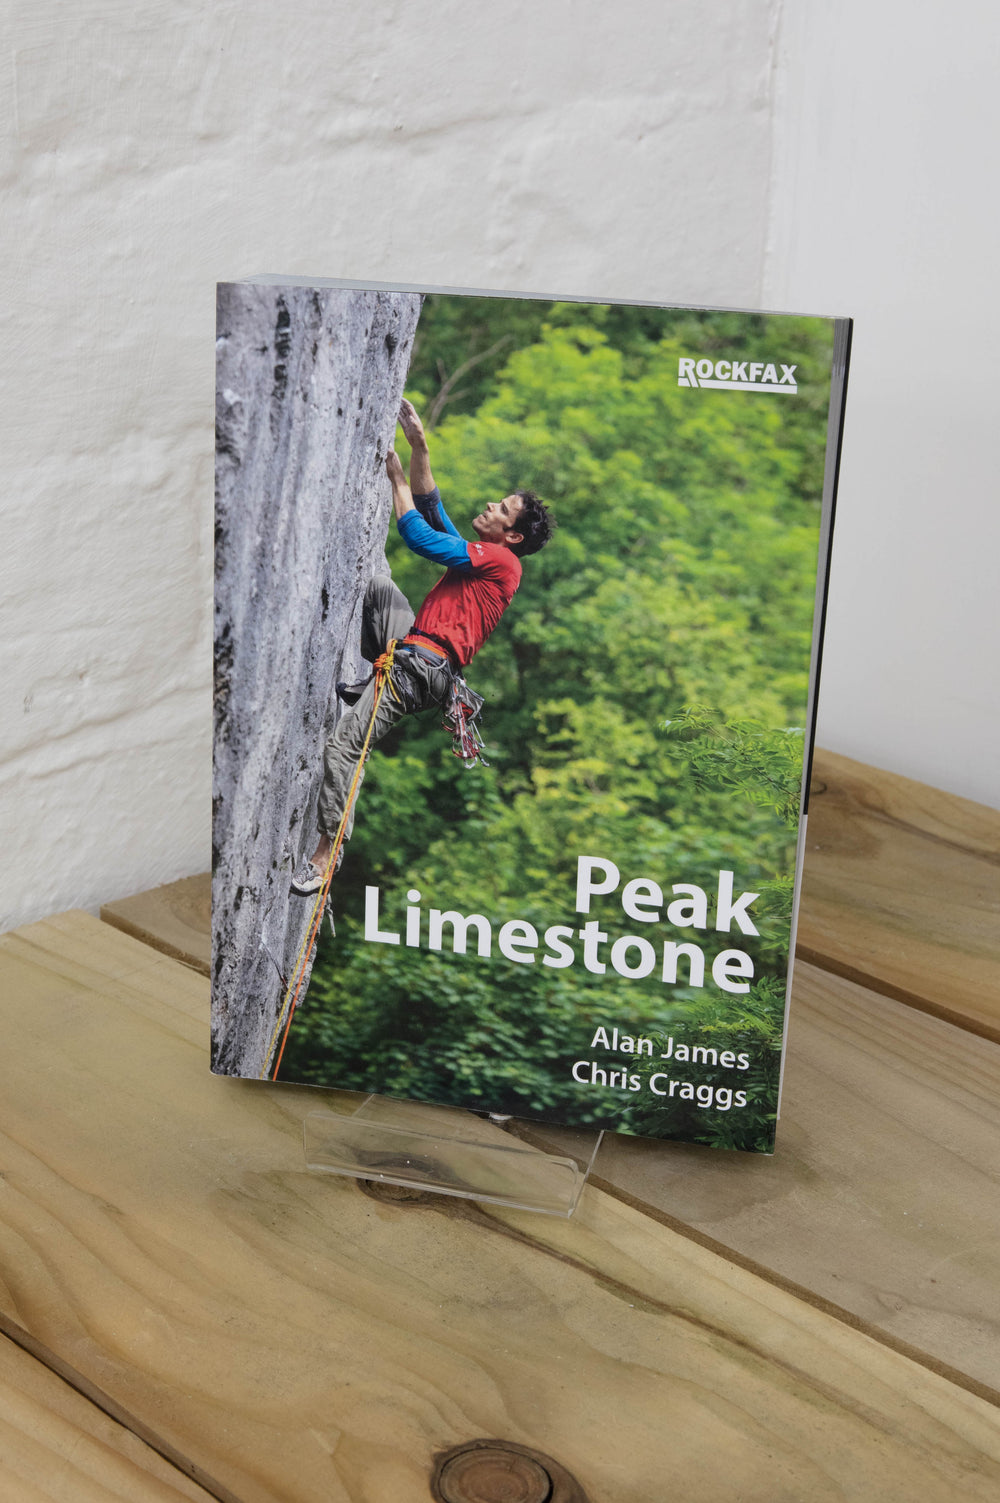 Rockfax - Peak Limestone (2020)